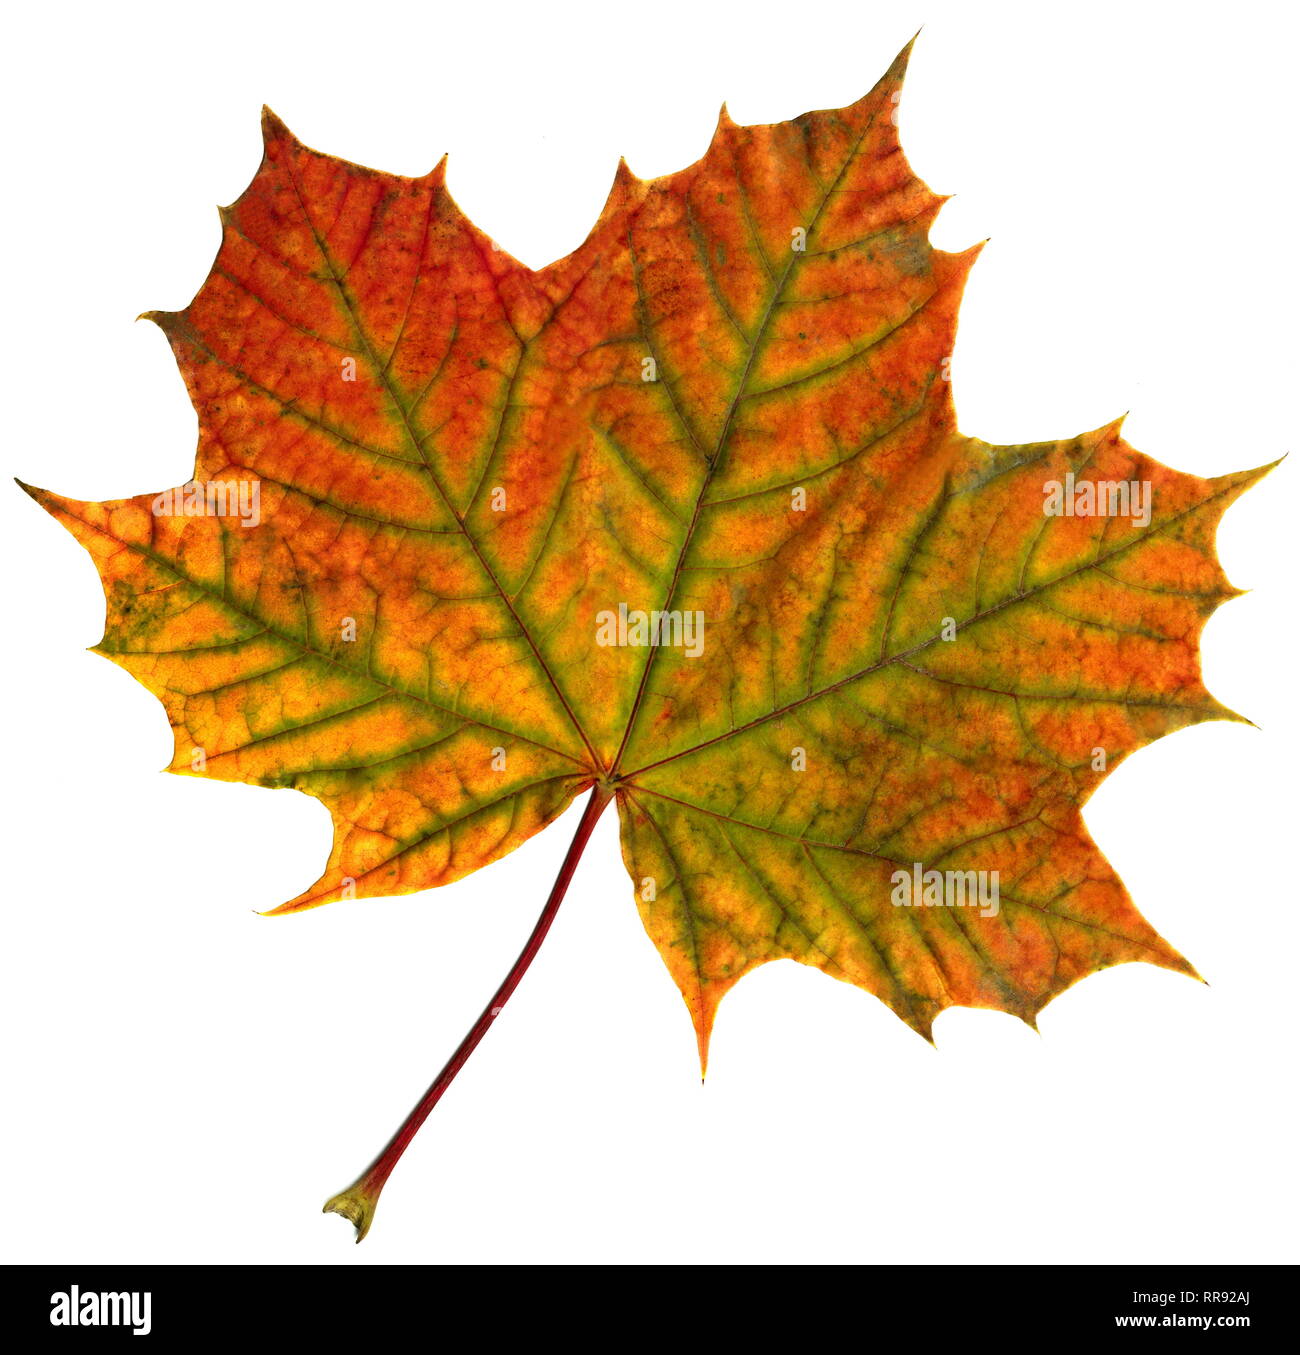 Botanik, Ahorn, Blätter im Herbst, einzelne Blatt, Additional-Rights - Clearance-Info - Not-Available Stockfoto